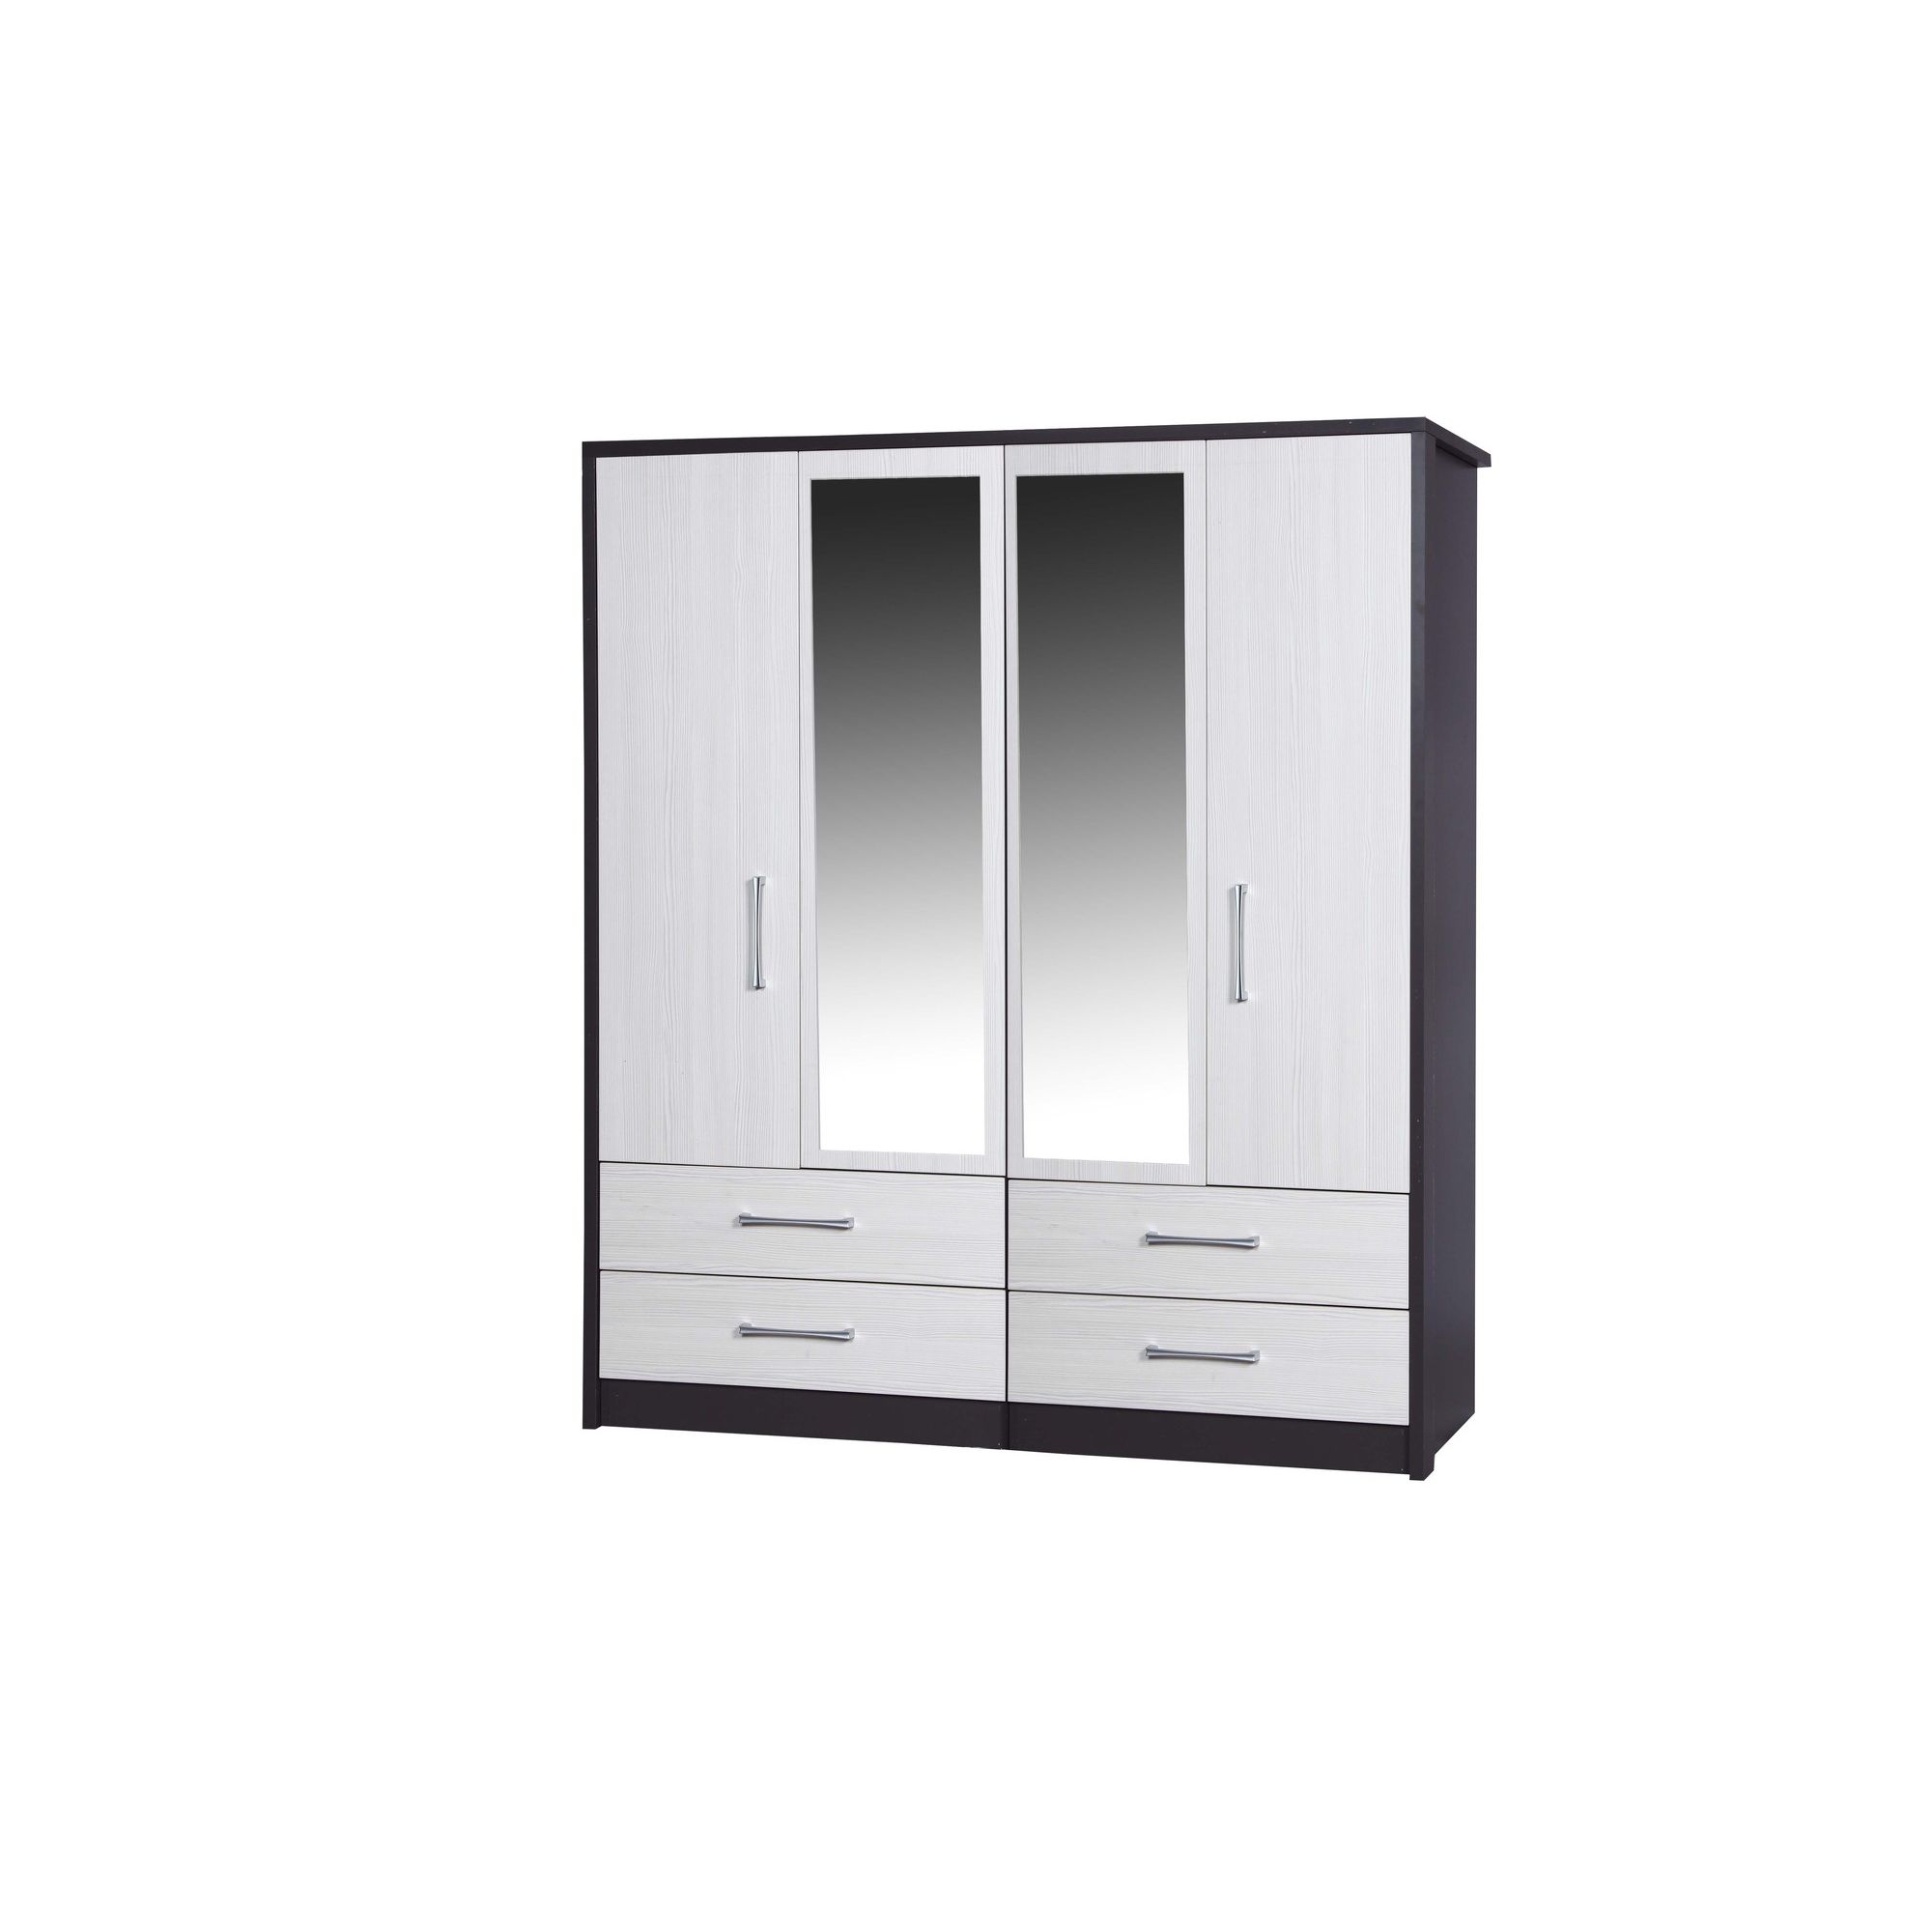 Alto Furniture Avola 4 Door Combi Wardrobe with 2 Mirrors - Grey Carcass With White Avola at Tescos Direct